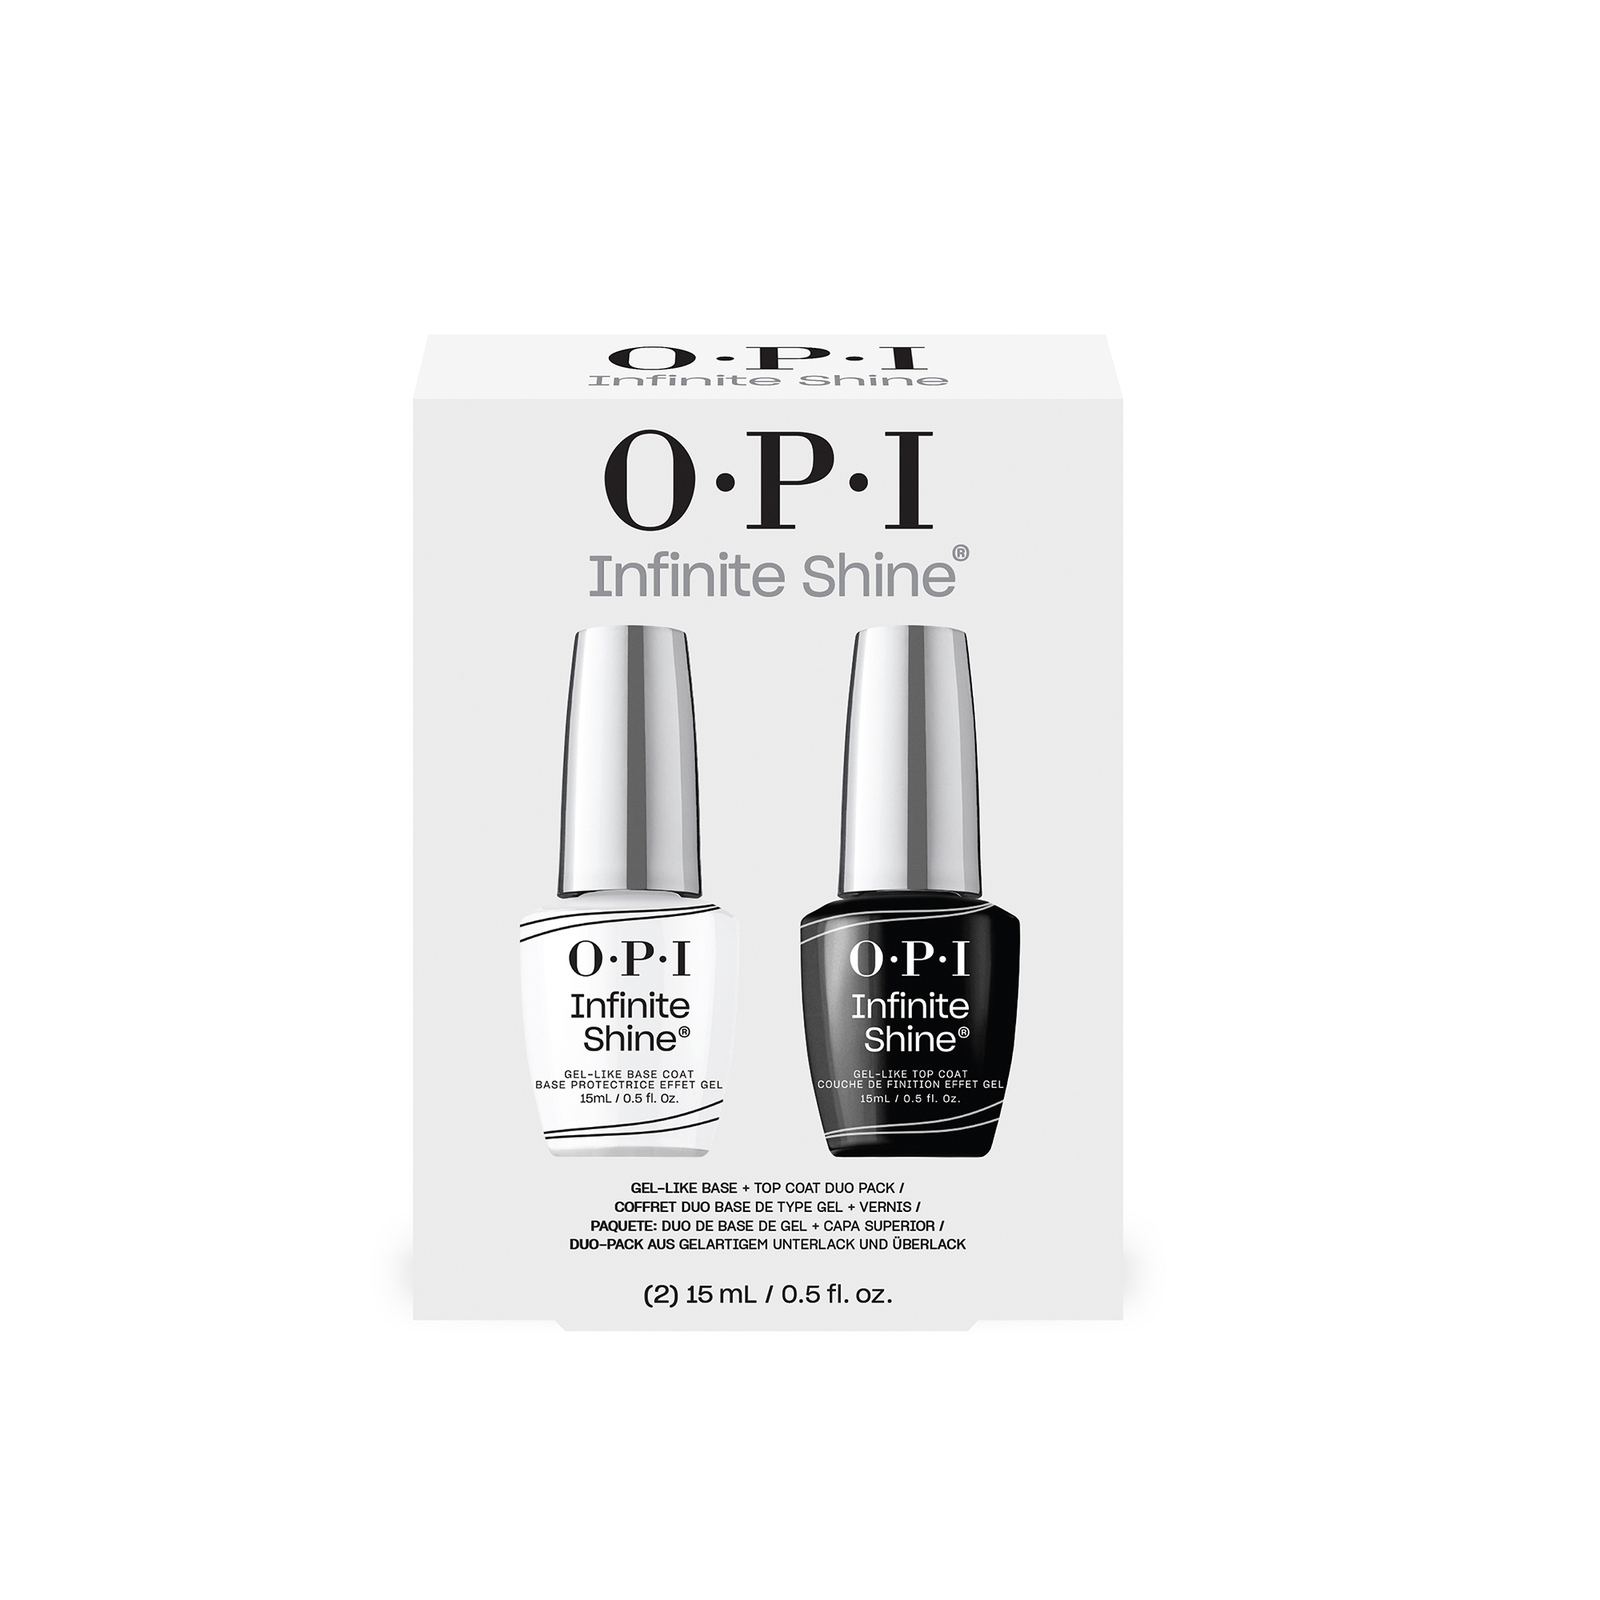 OPI Infinite Shine Long-Wear Base Coat and Top Coat Nail Polish Duo Pack 2 x 15ml